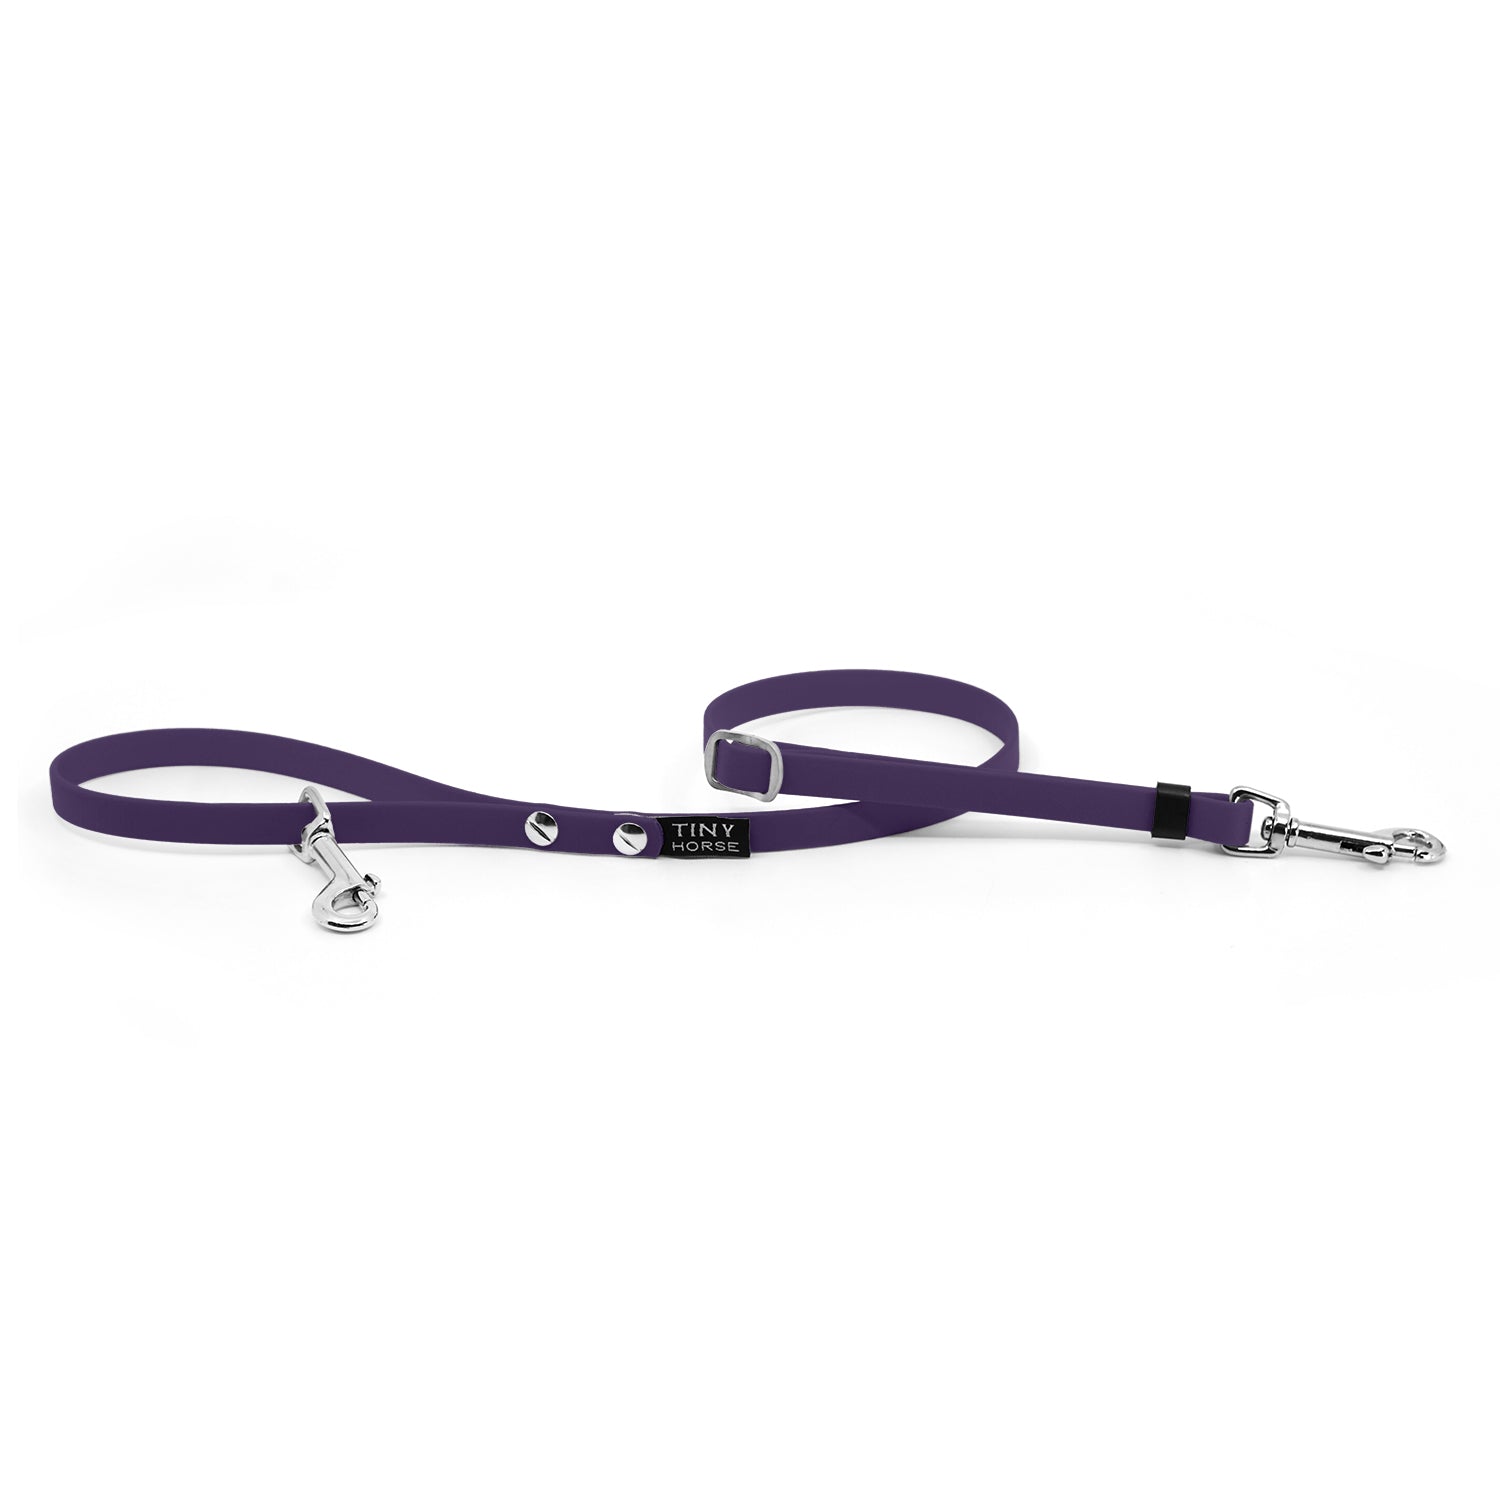 Purple lightweight adjustable biothane leash for walking smaller dogs